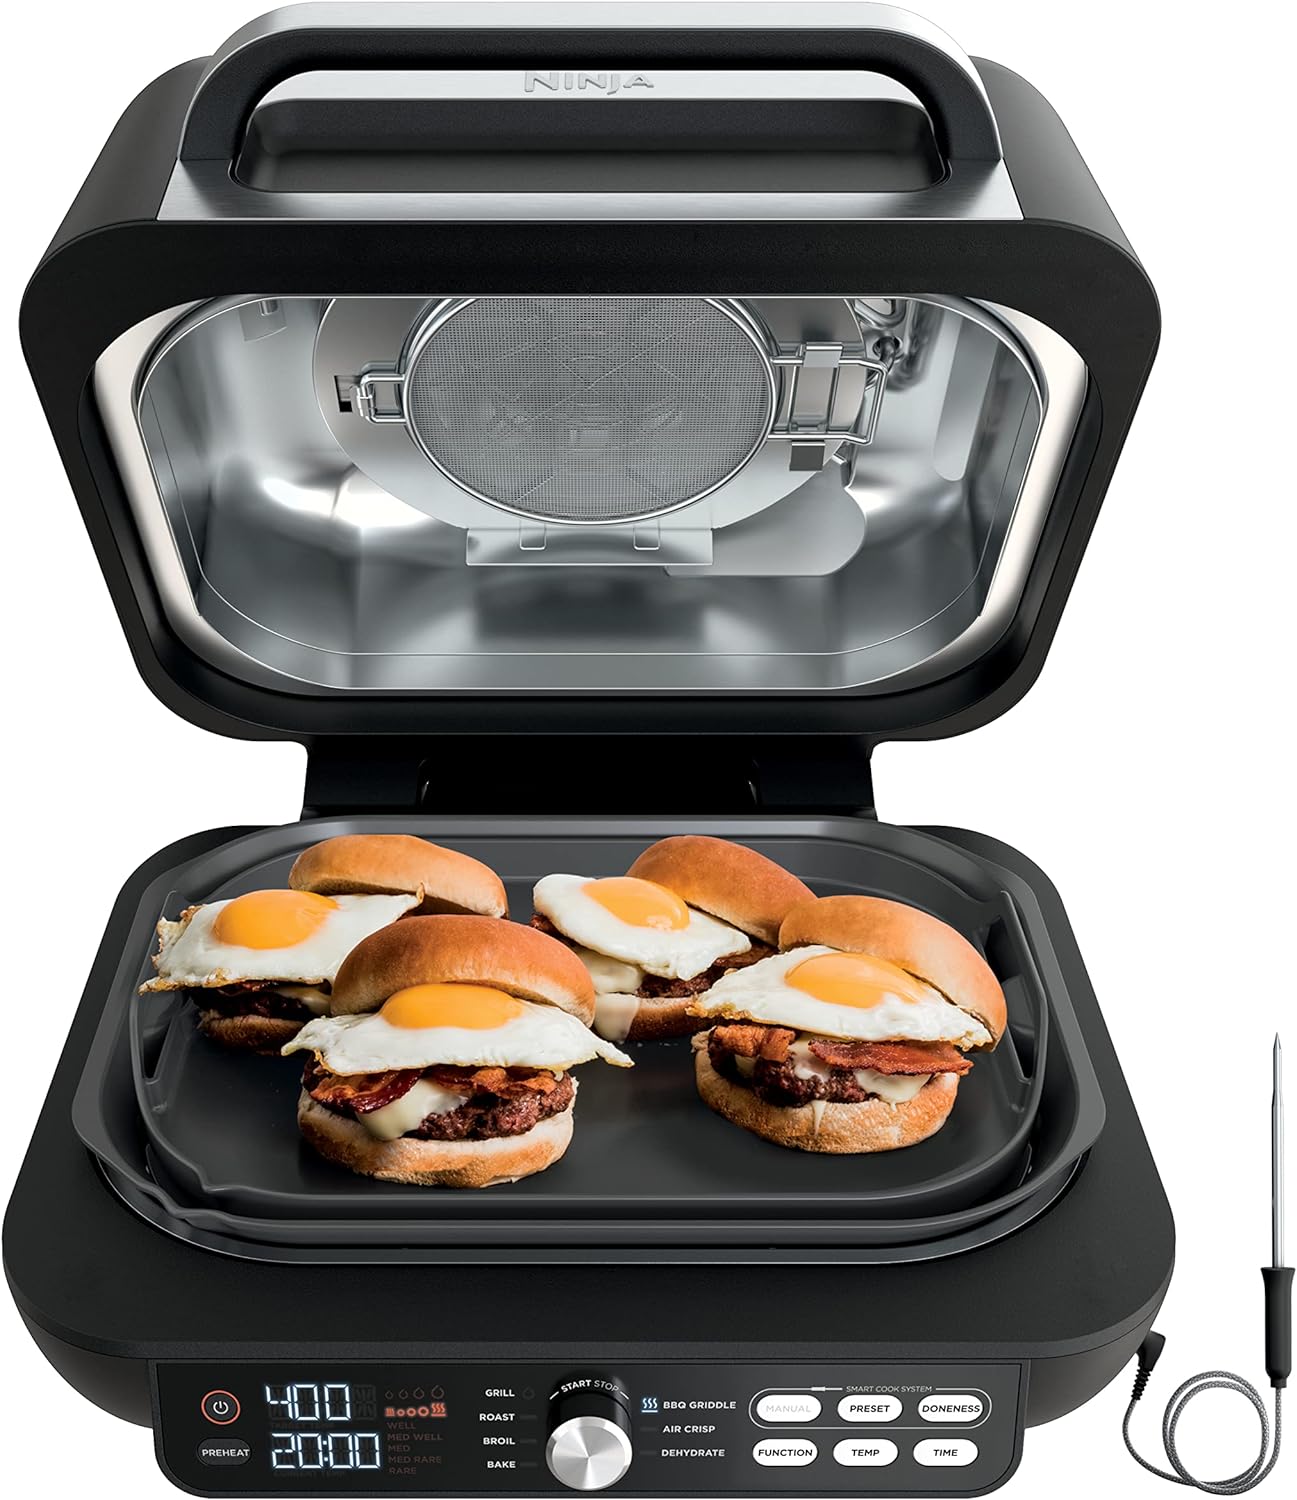 Ninja IG651 Foodi Smart XL Pro 7-in-1 Indoor Grill/Griddle Combo $229.99 at Amazon